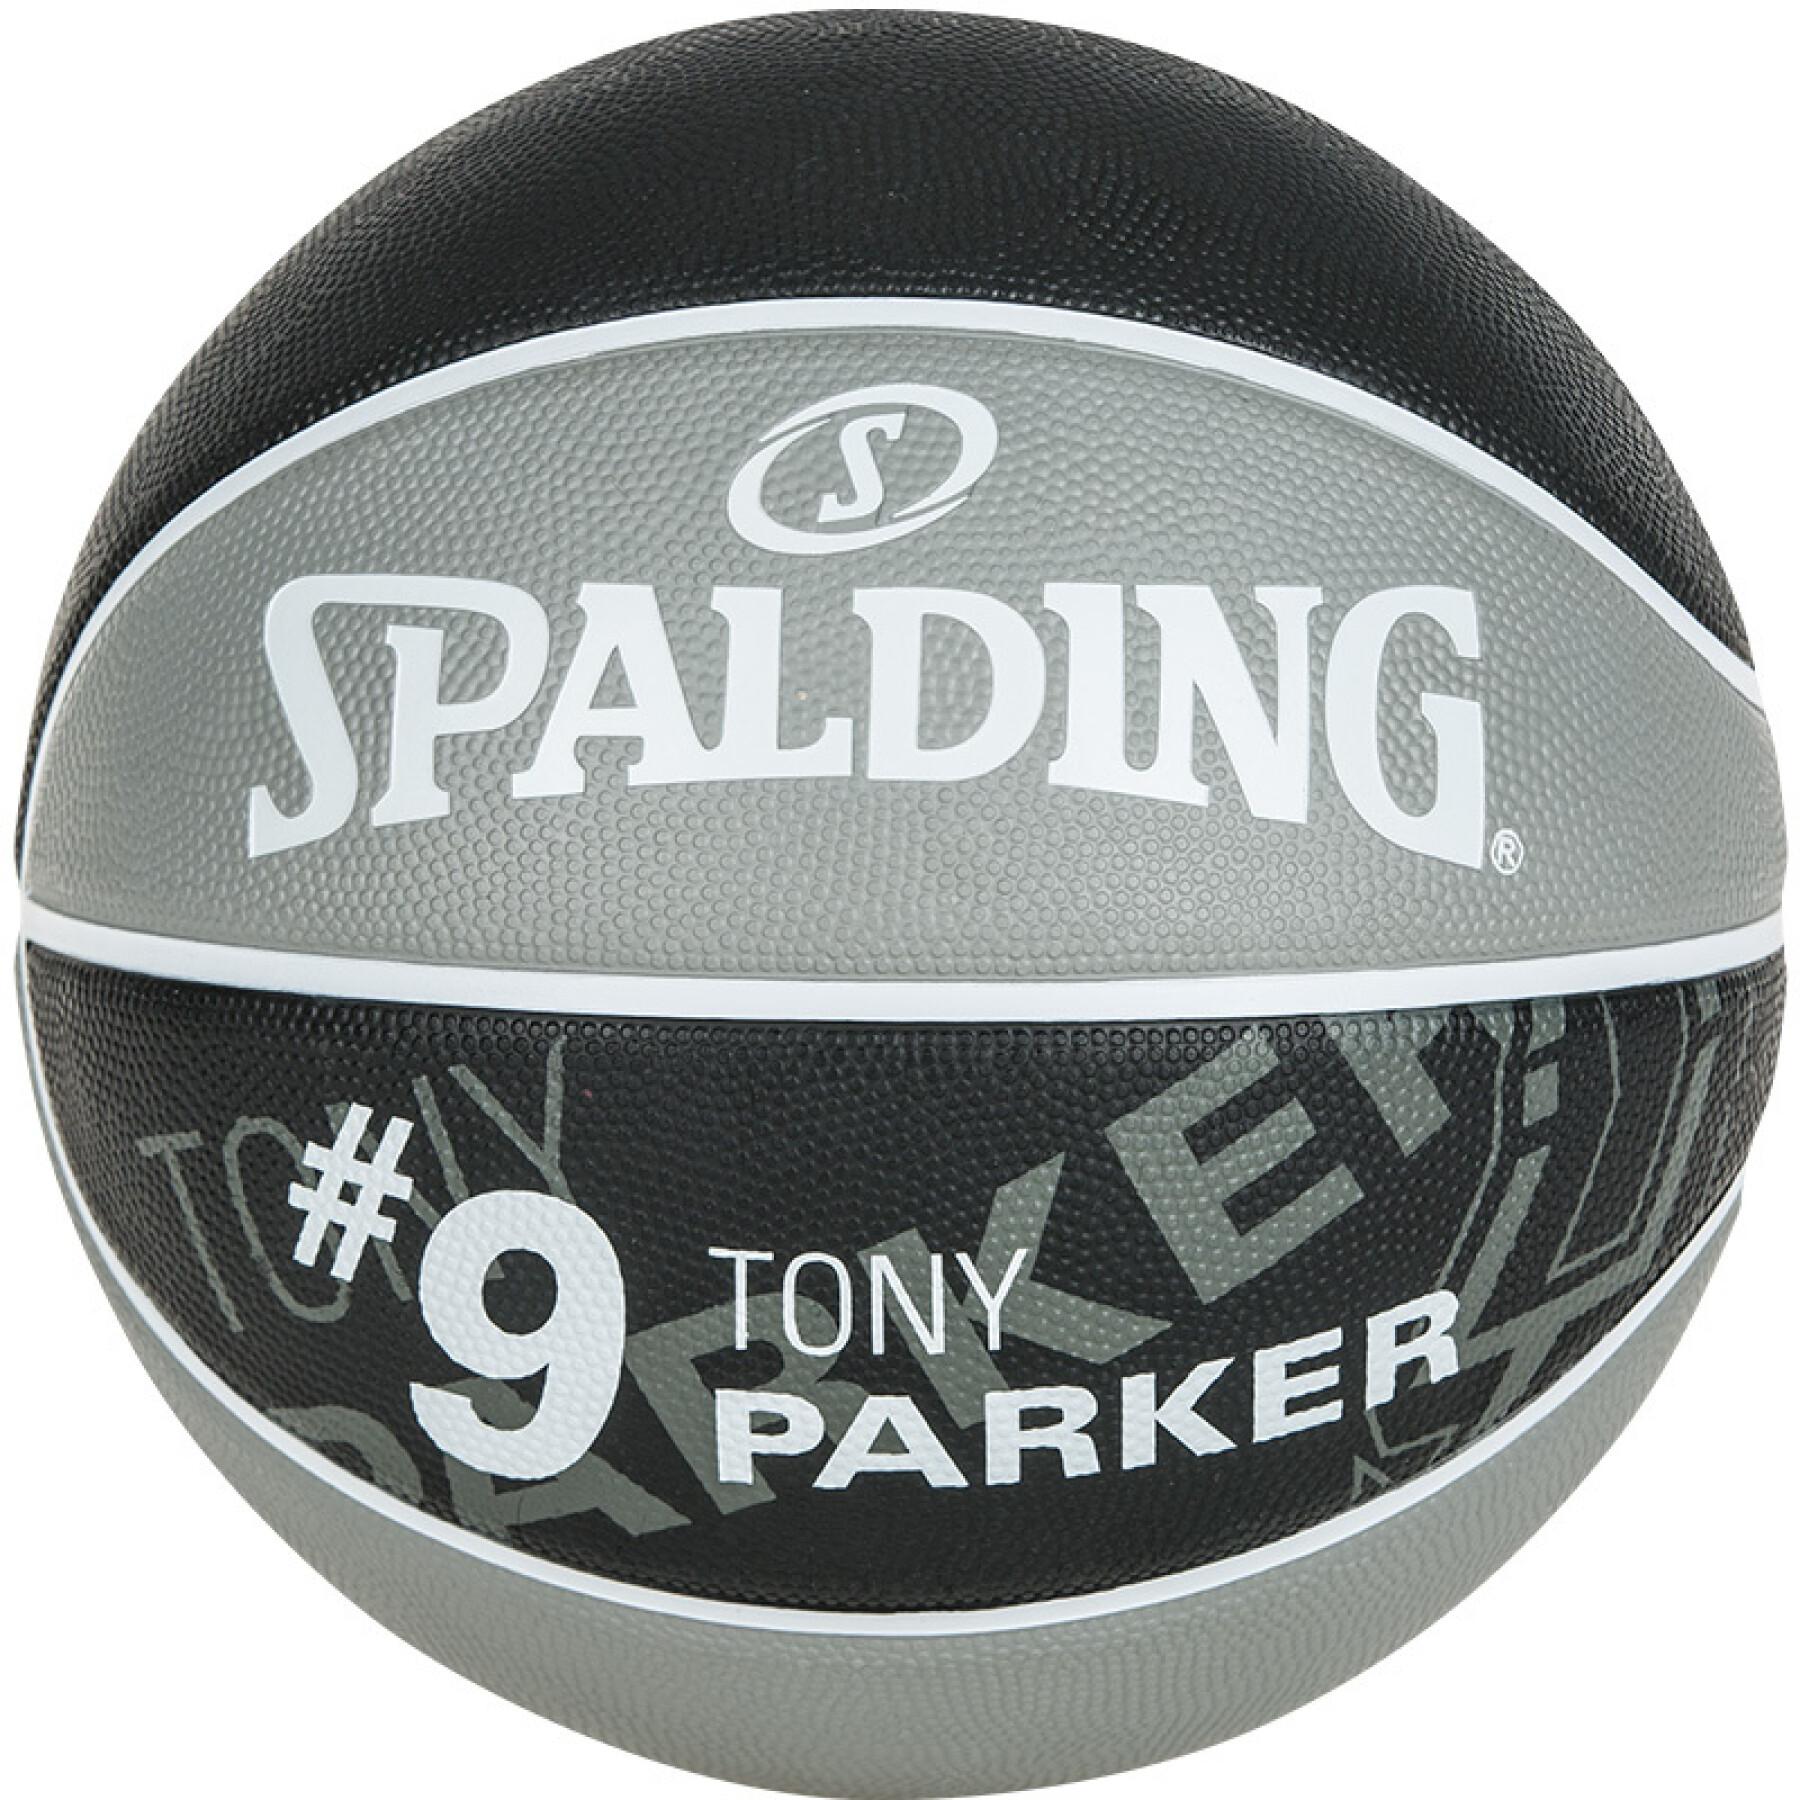 Balloon Spalding Player Tony Parker